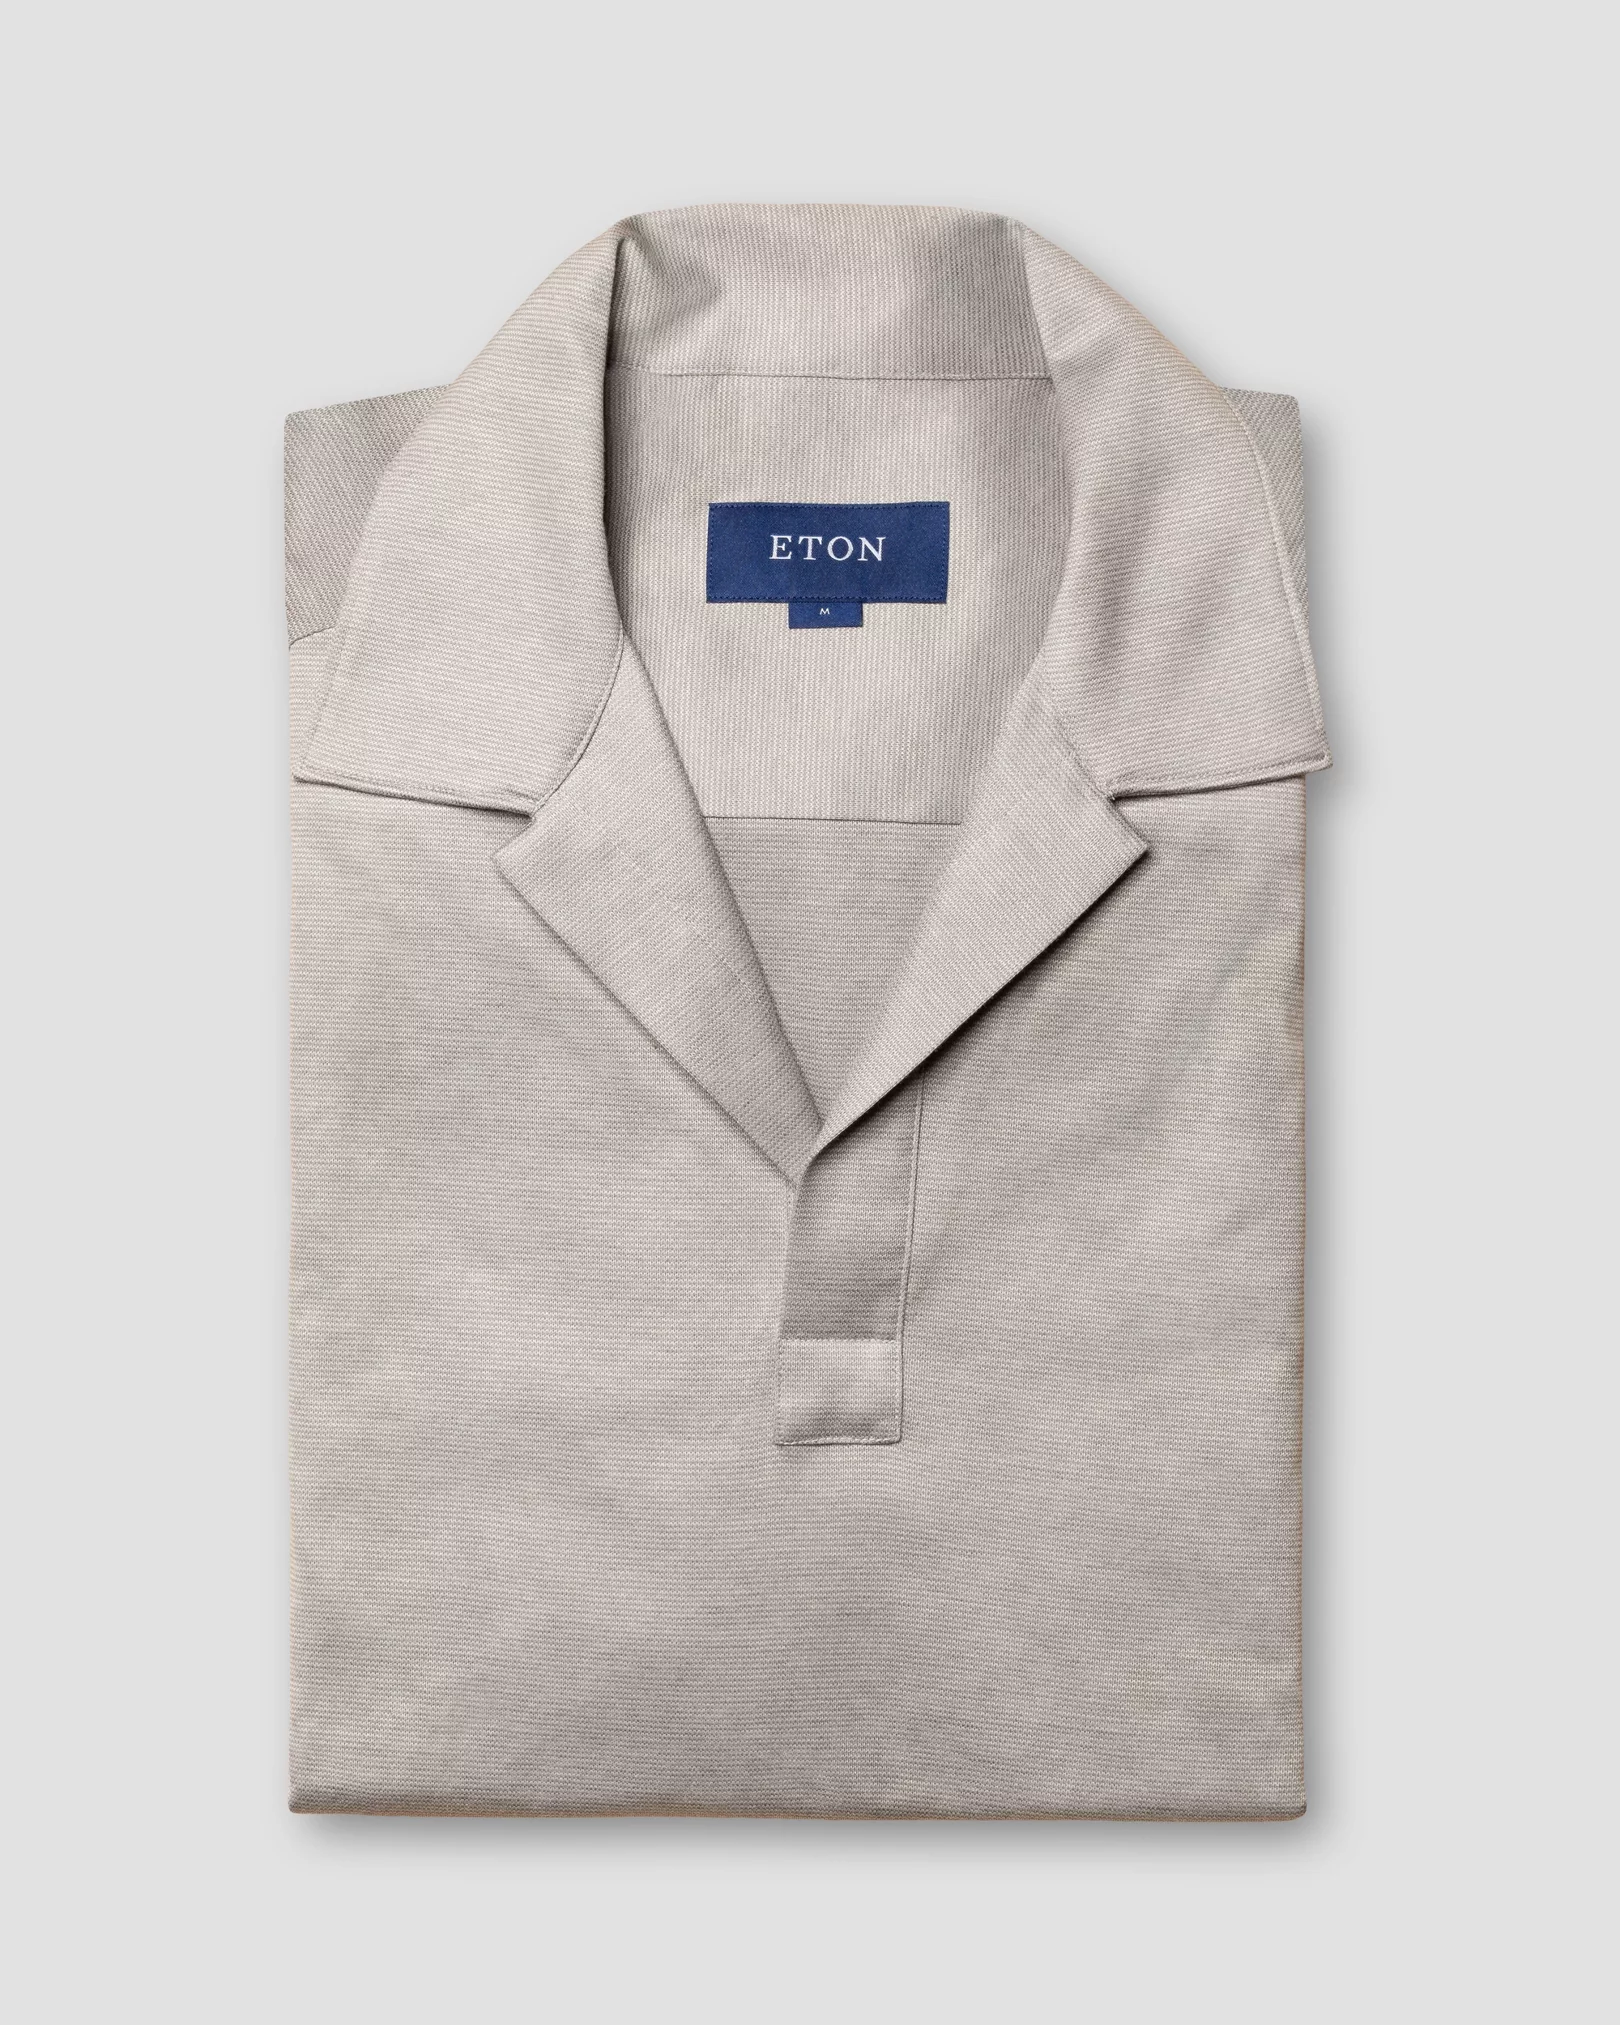 Eton - light grey interlock jersey open collar